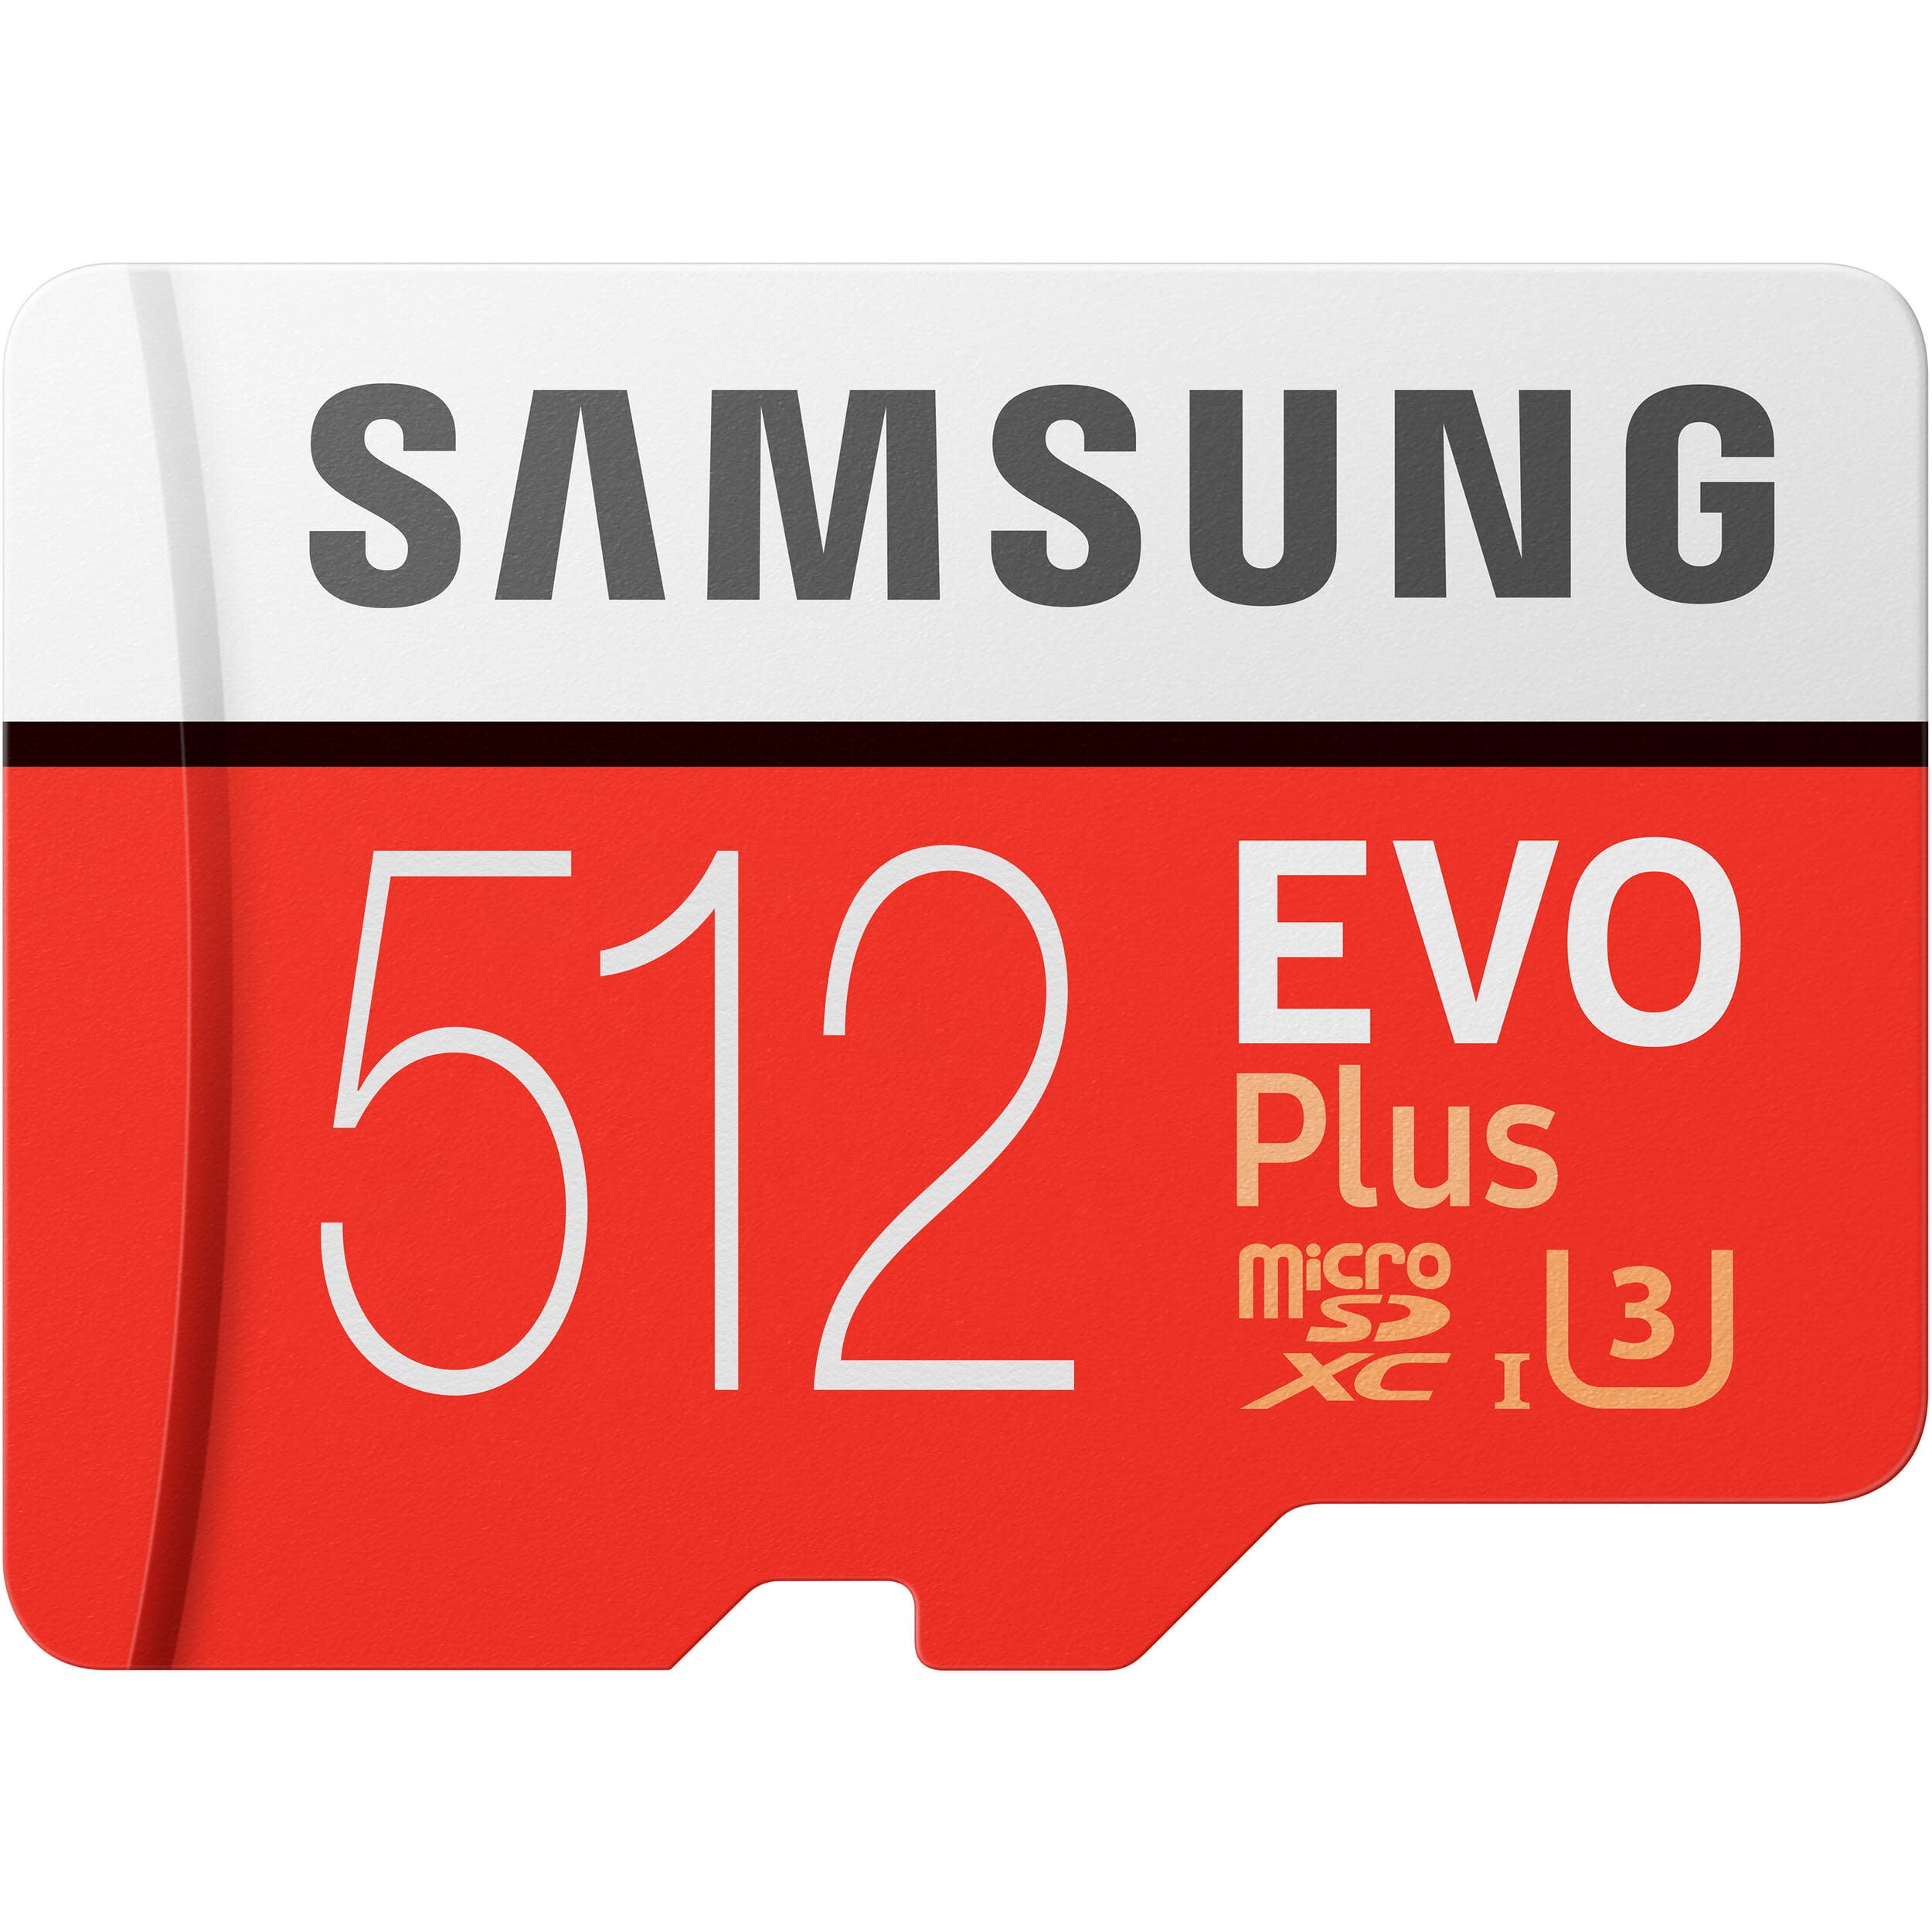 Samsung 512GB Evo Plus microSDXC Memory Card